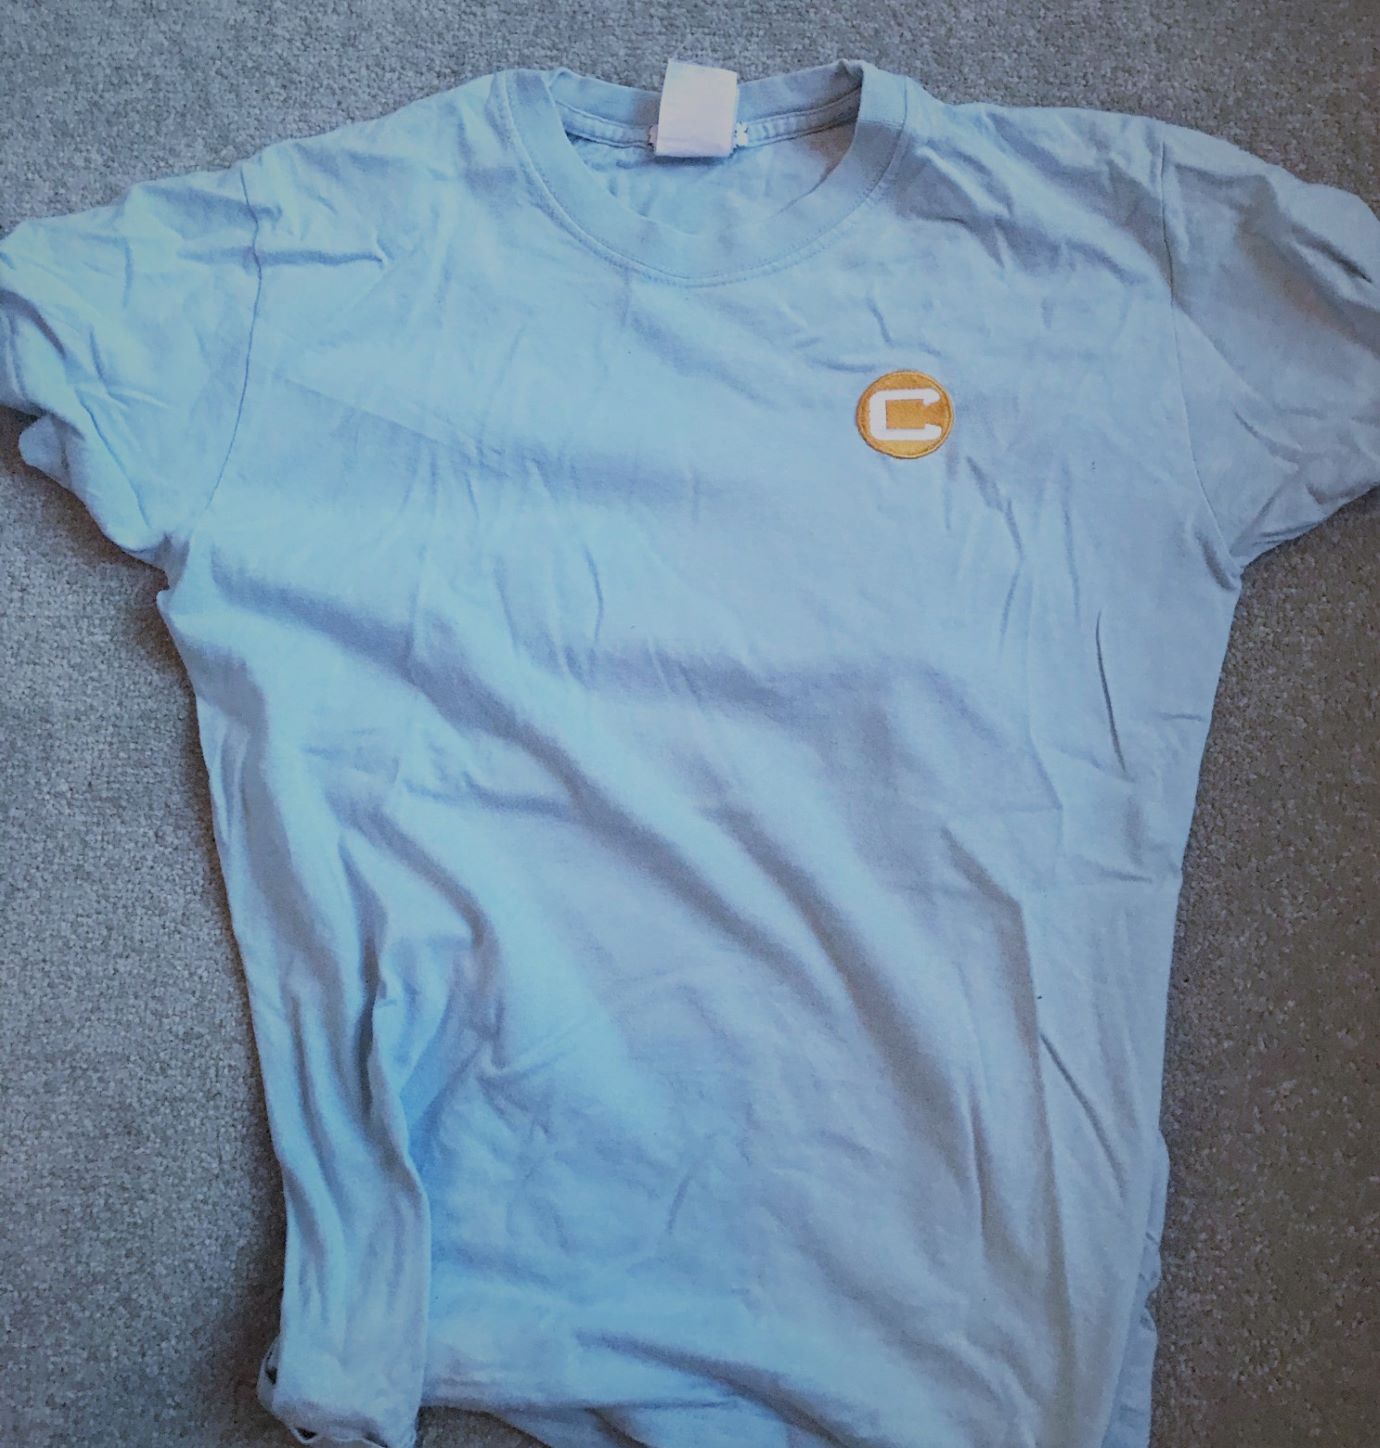 Charter North PE Shirt - Marked 09-10 years